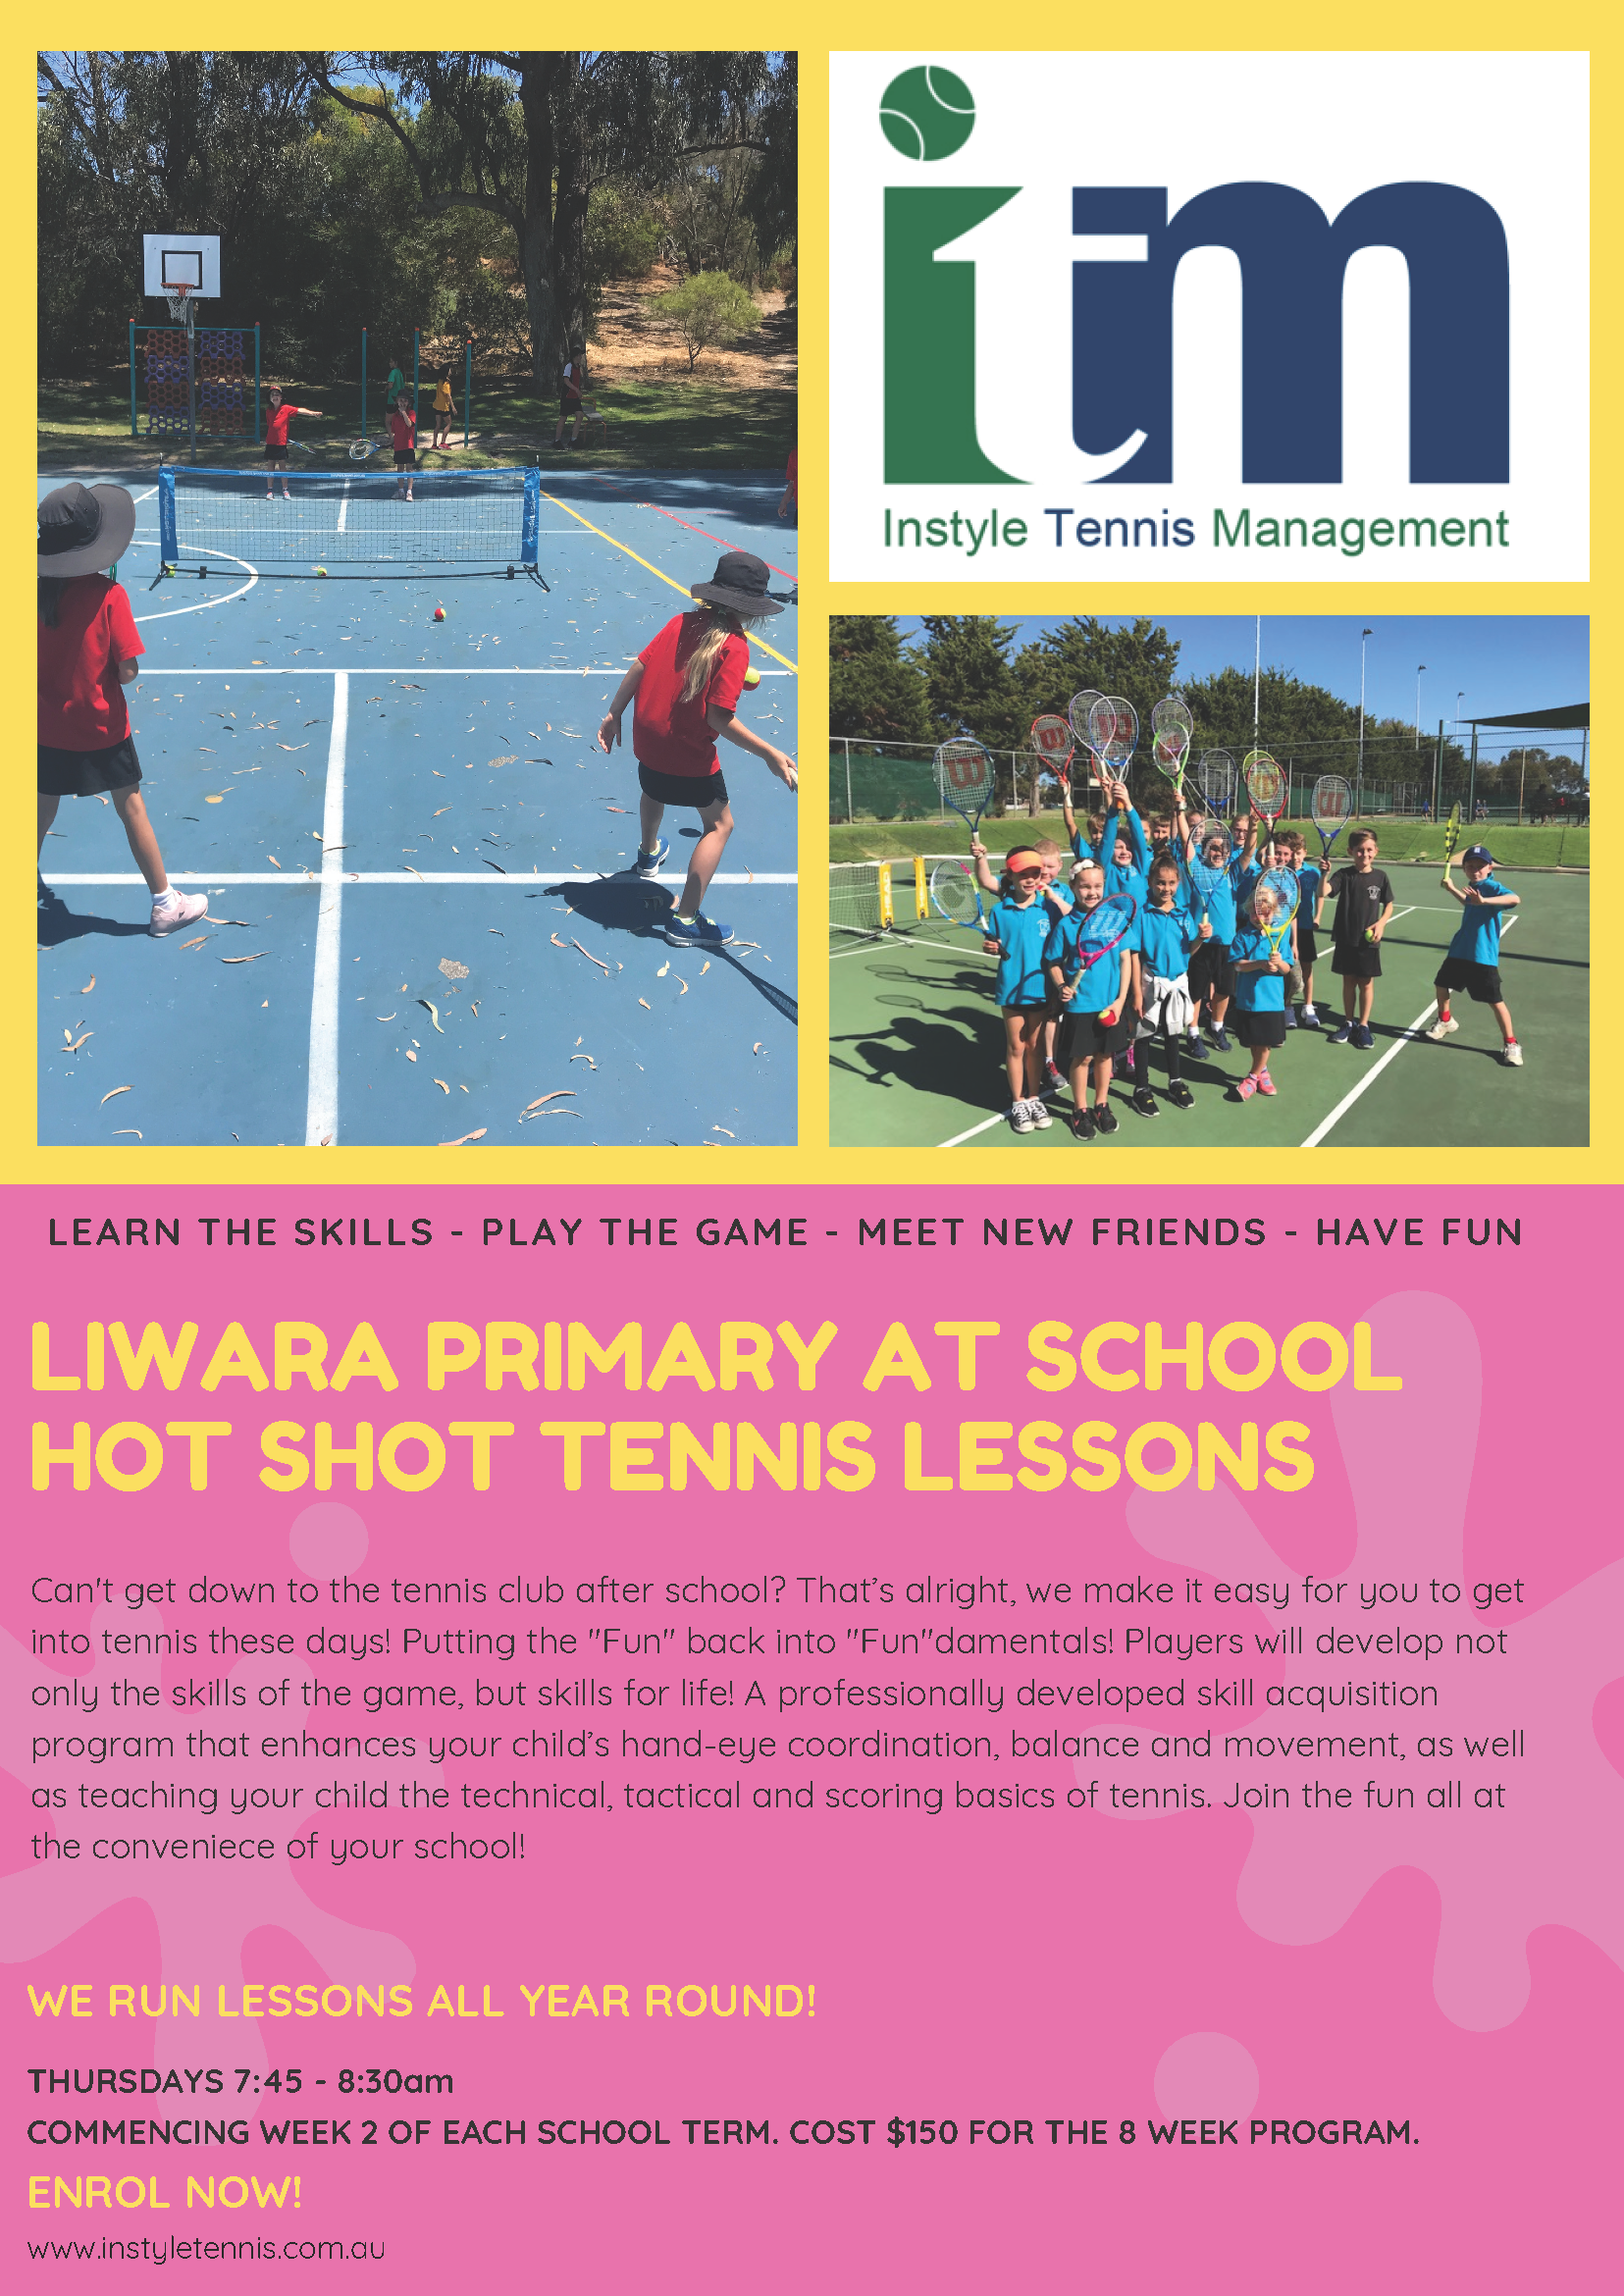 Tennis Liwara primary_Page_1